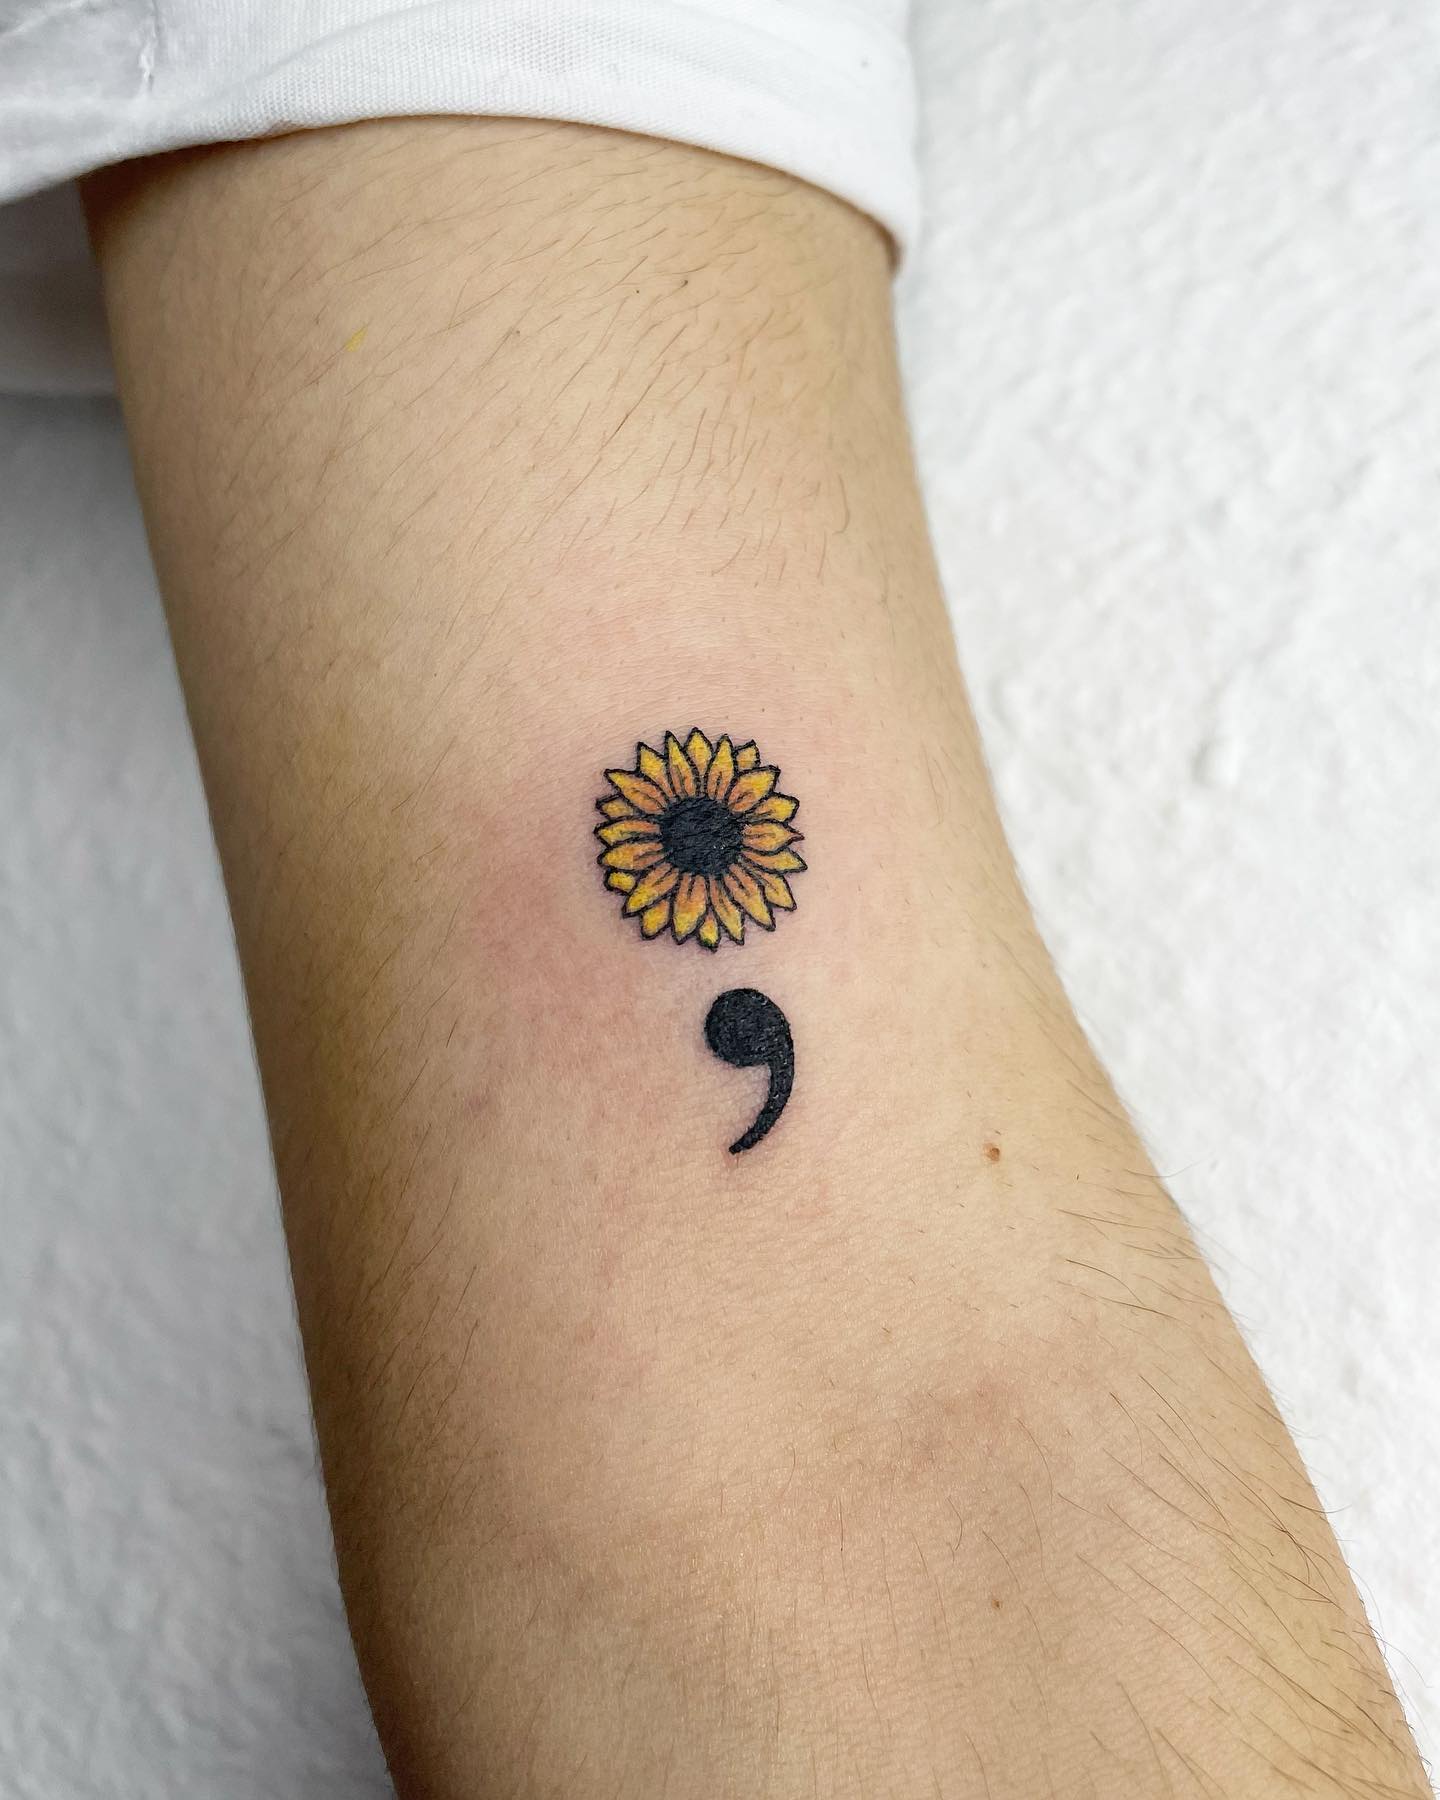 Small Sunflower Semicolon Tattoo on Arm